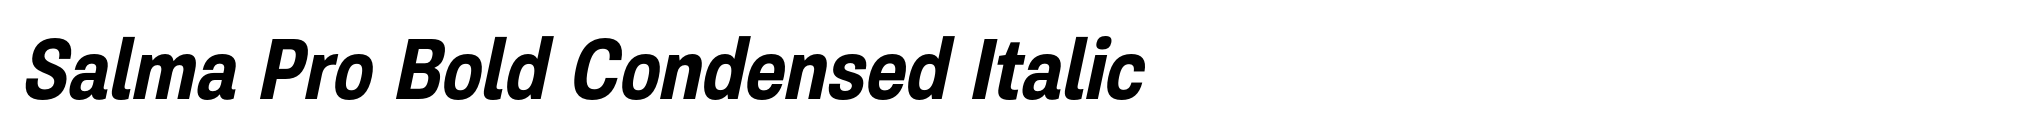 Salma Pro Bold Condensed Italic image